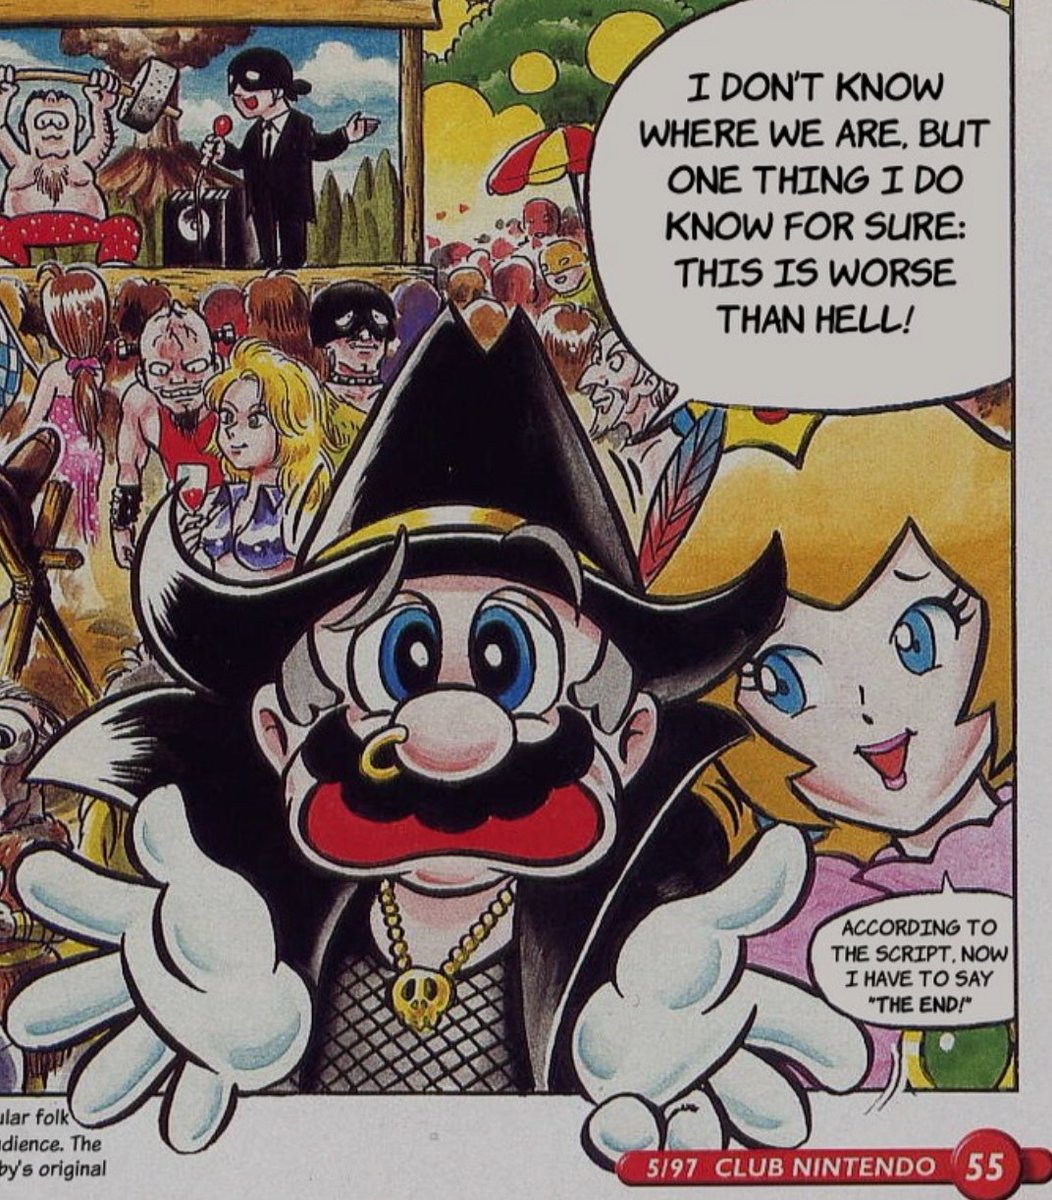 Club Nintendo Germany's comics were on drugs 